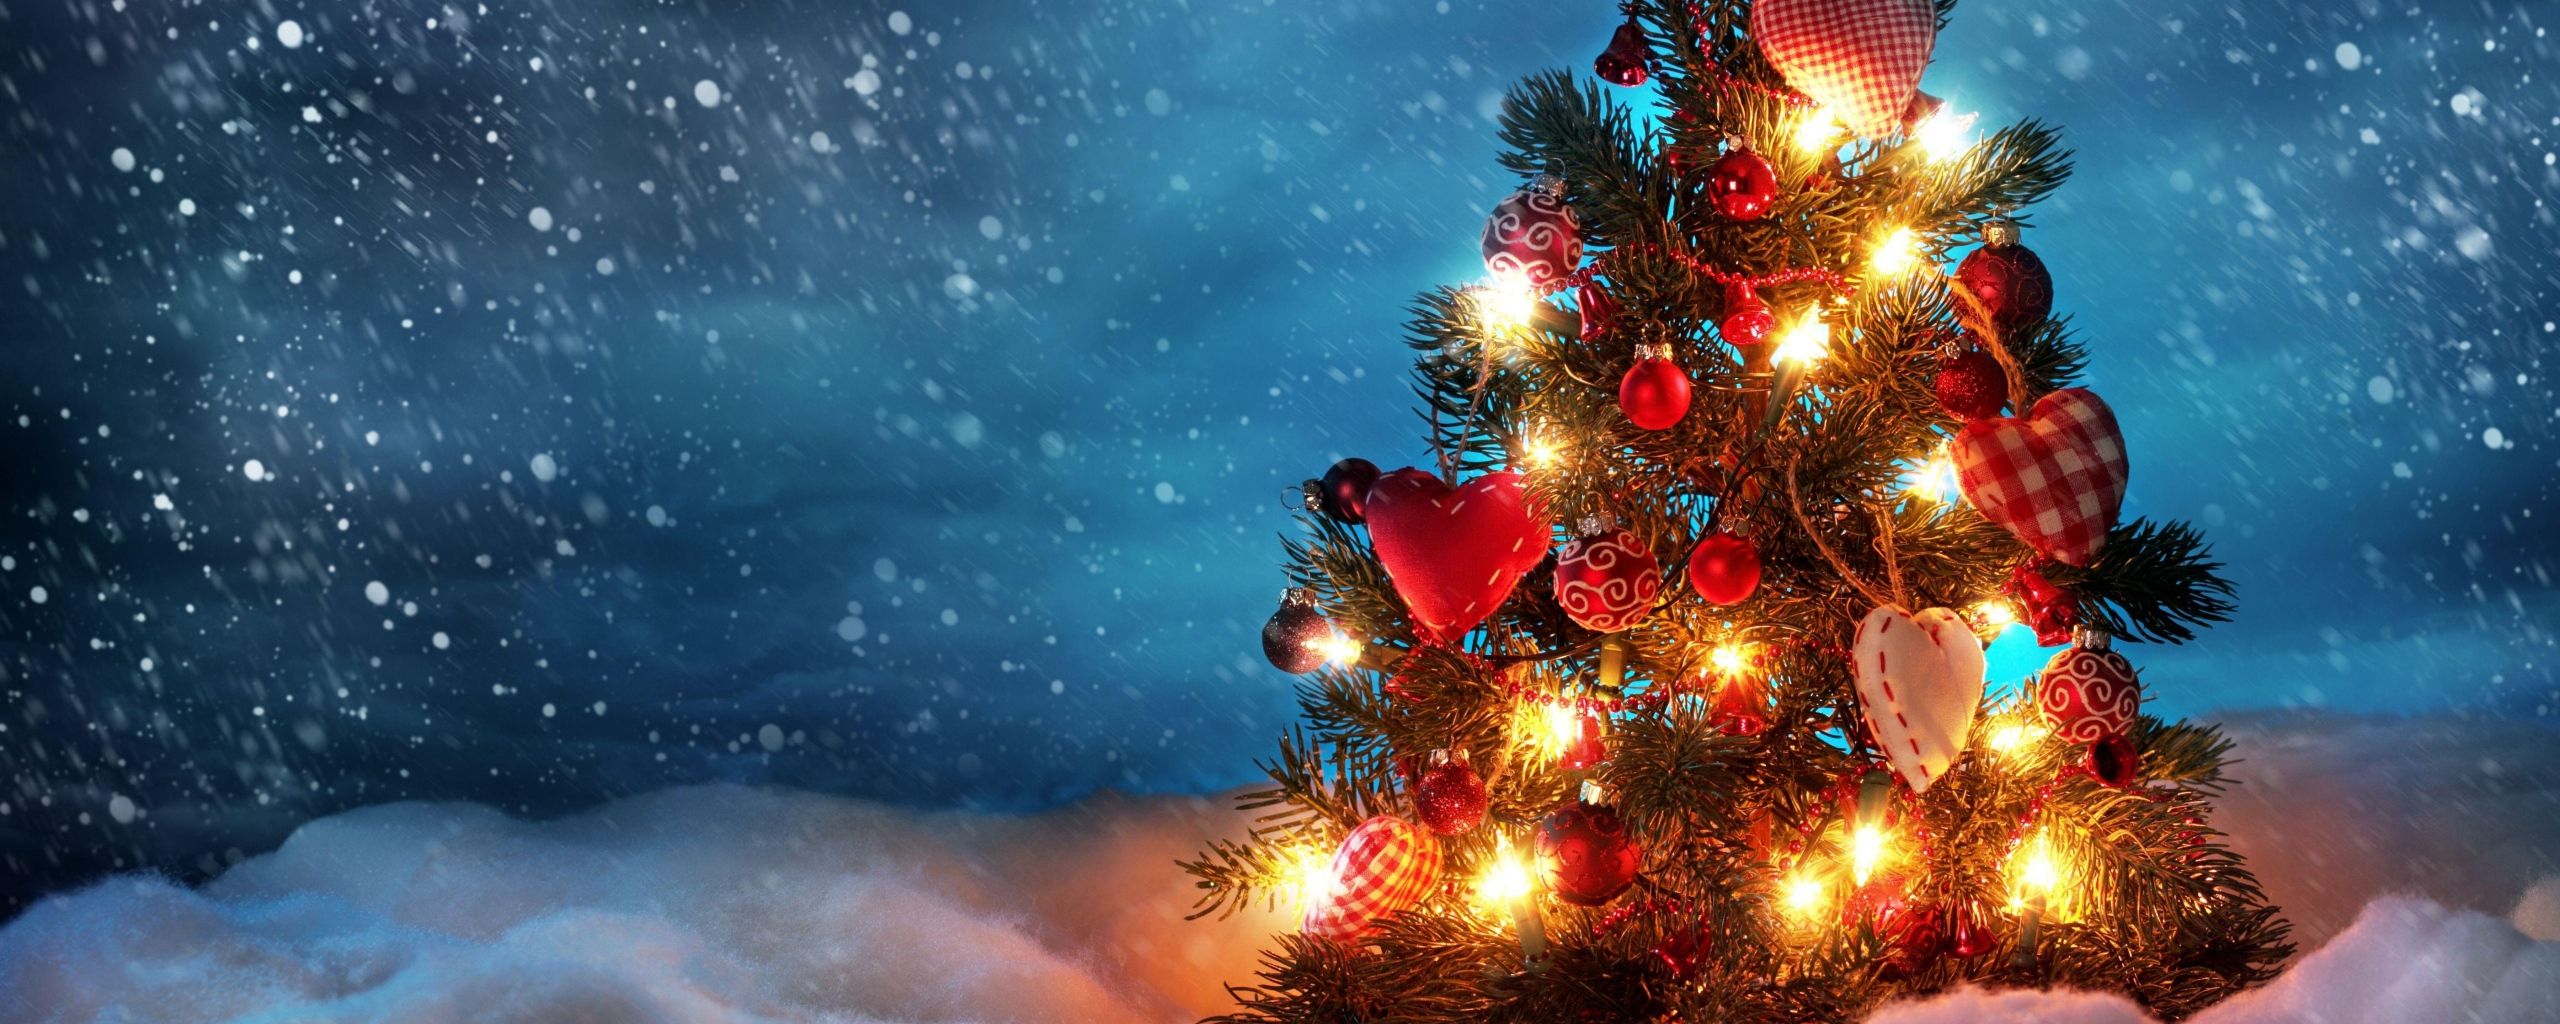 듀얼 모니터 크리스마스 벽지,크리스마스 트리,나무,크리스마스 장식,크리스마스,하늘